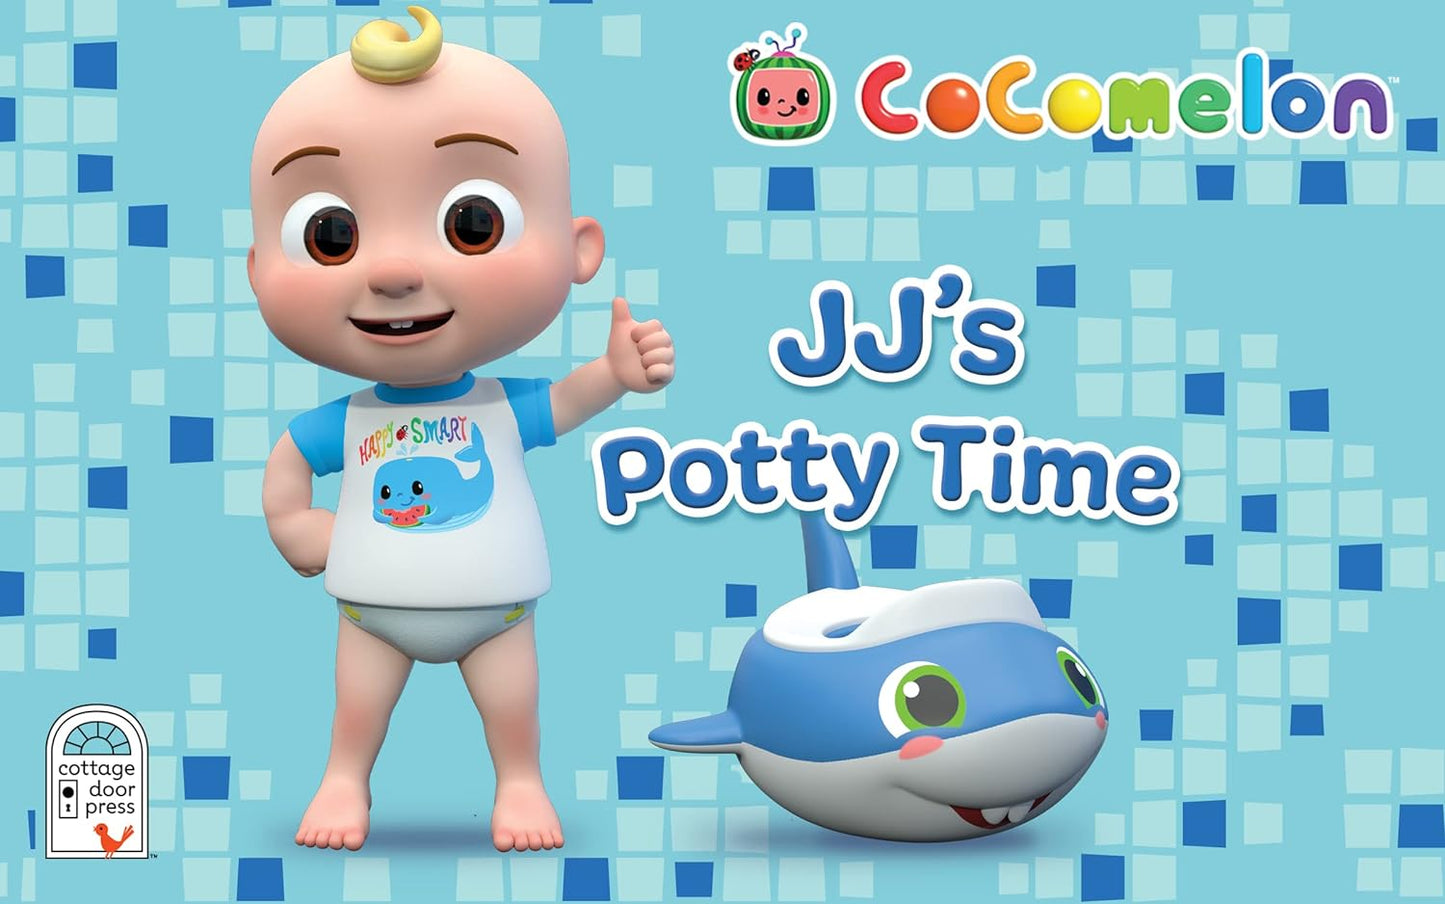 Cocomelon JJ's Potty Time 3-Button Potty Training Sound Board Book